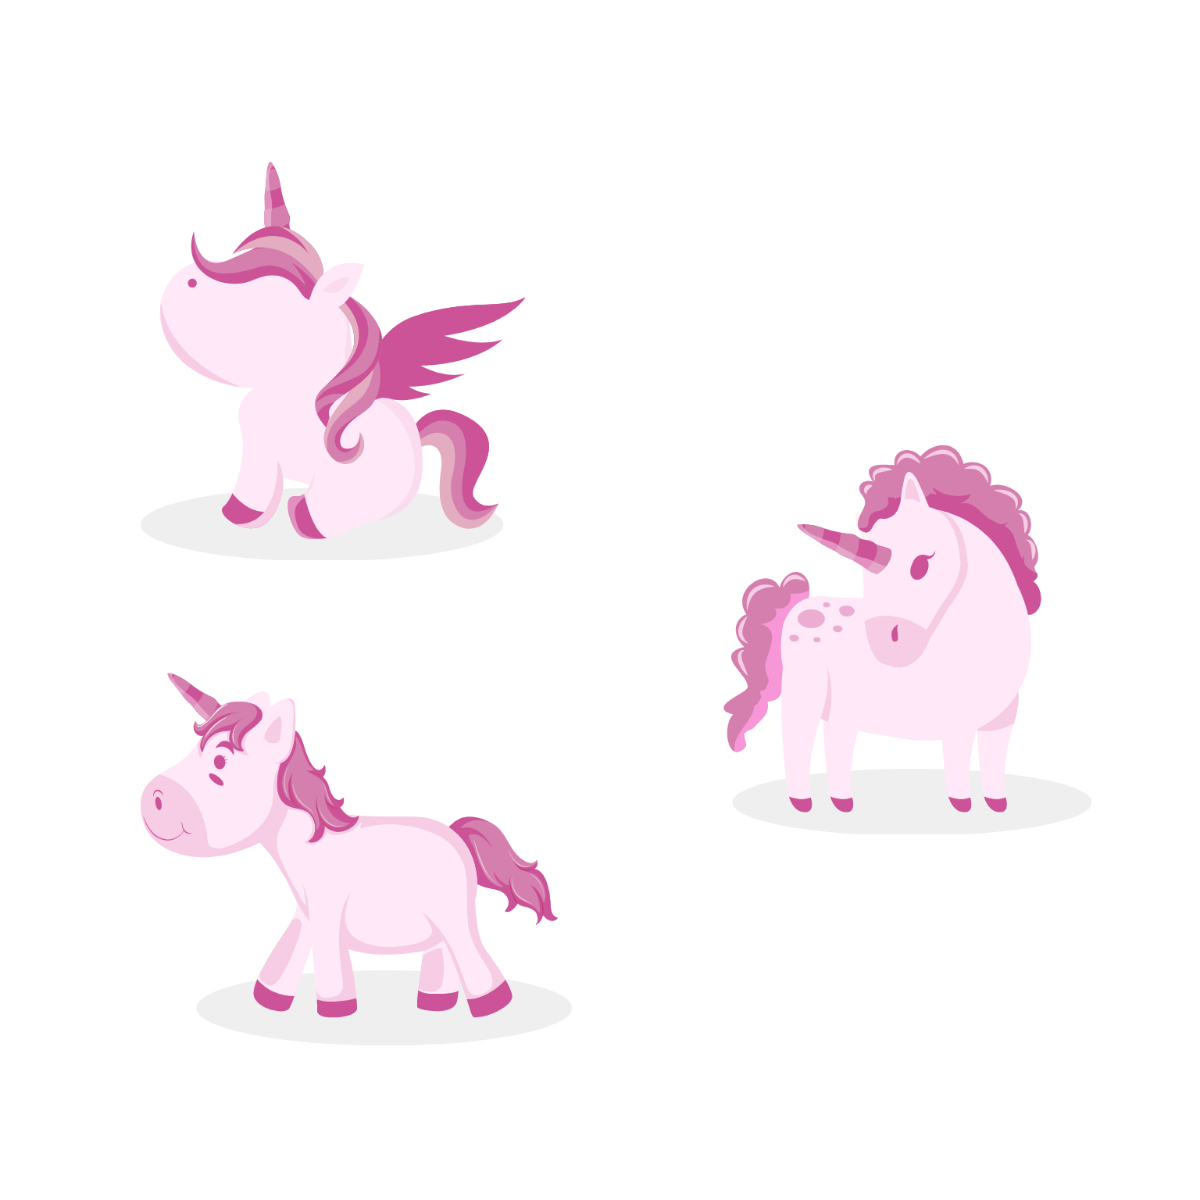 Pink Unicorn Vector Template